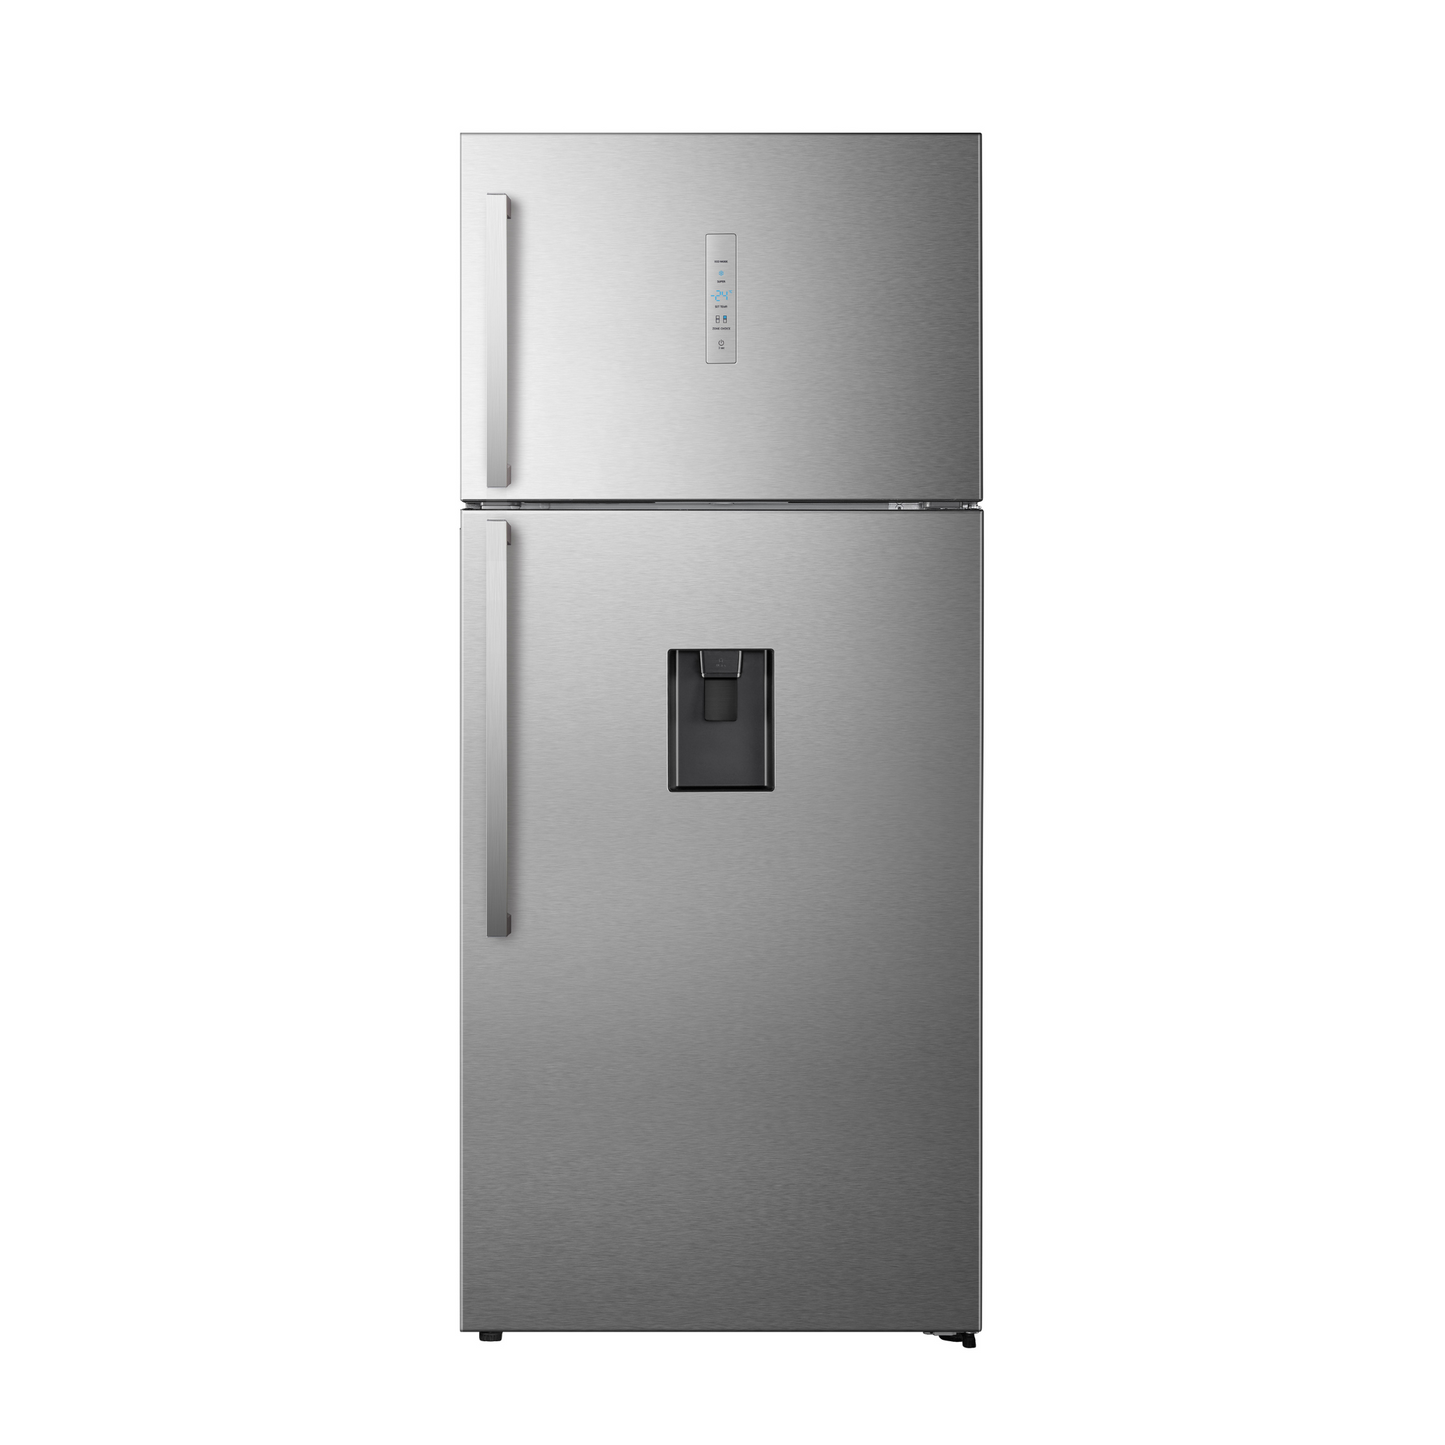 Hisense 729L Inverter Compressor Refrigerator, RT729N4WSU